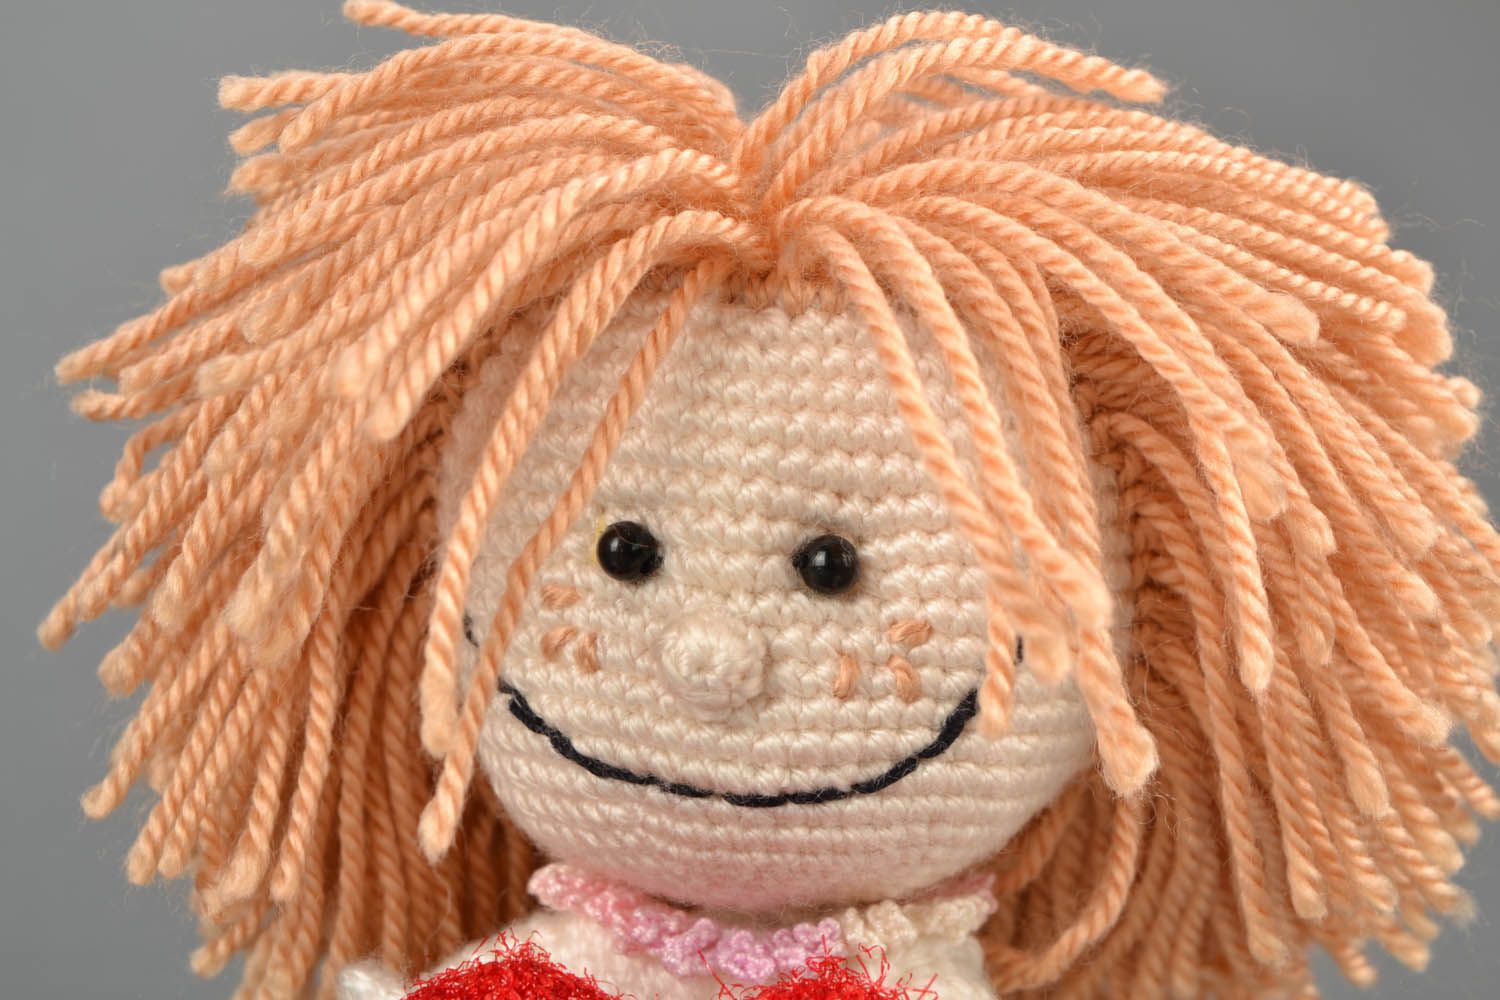 Soft crocheted doll photo 4